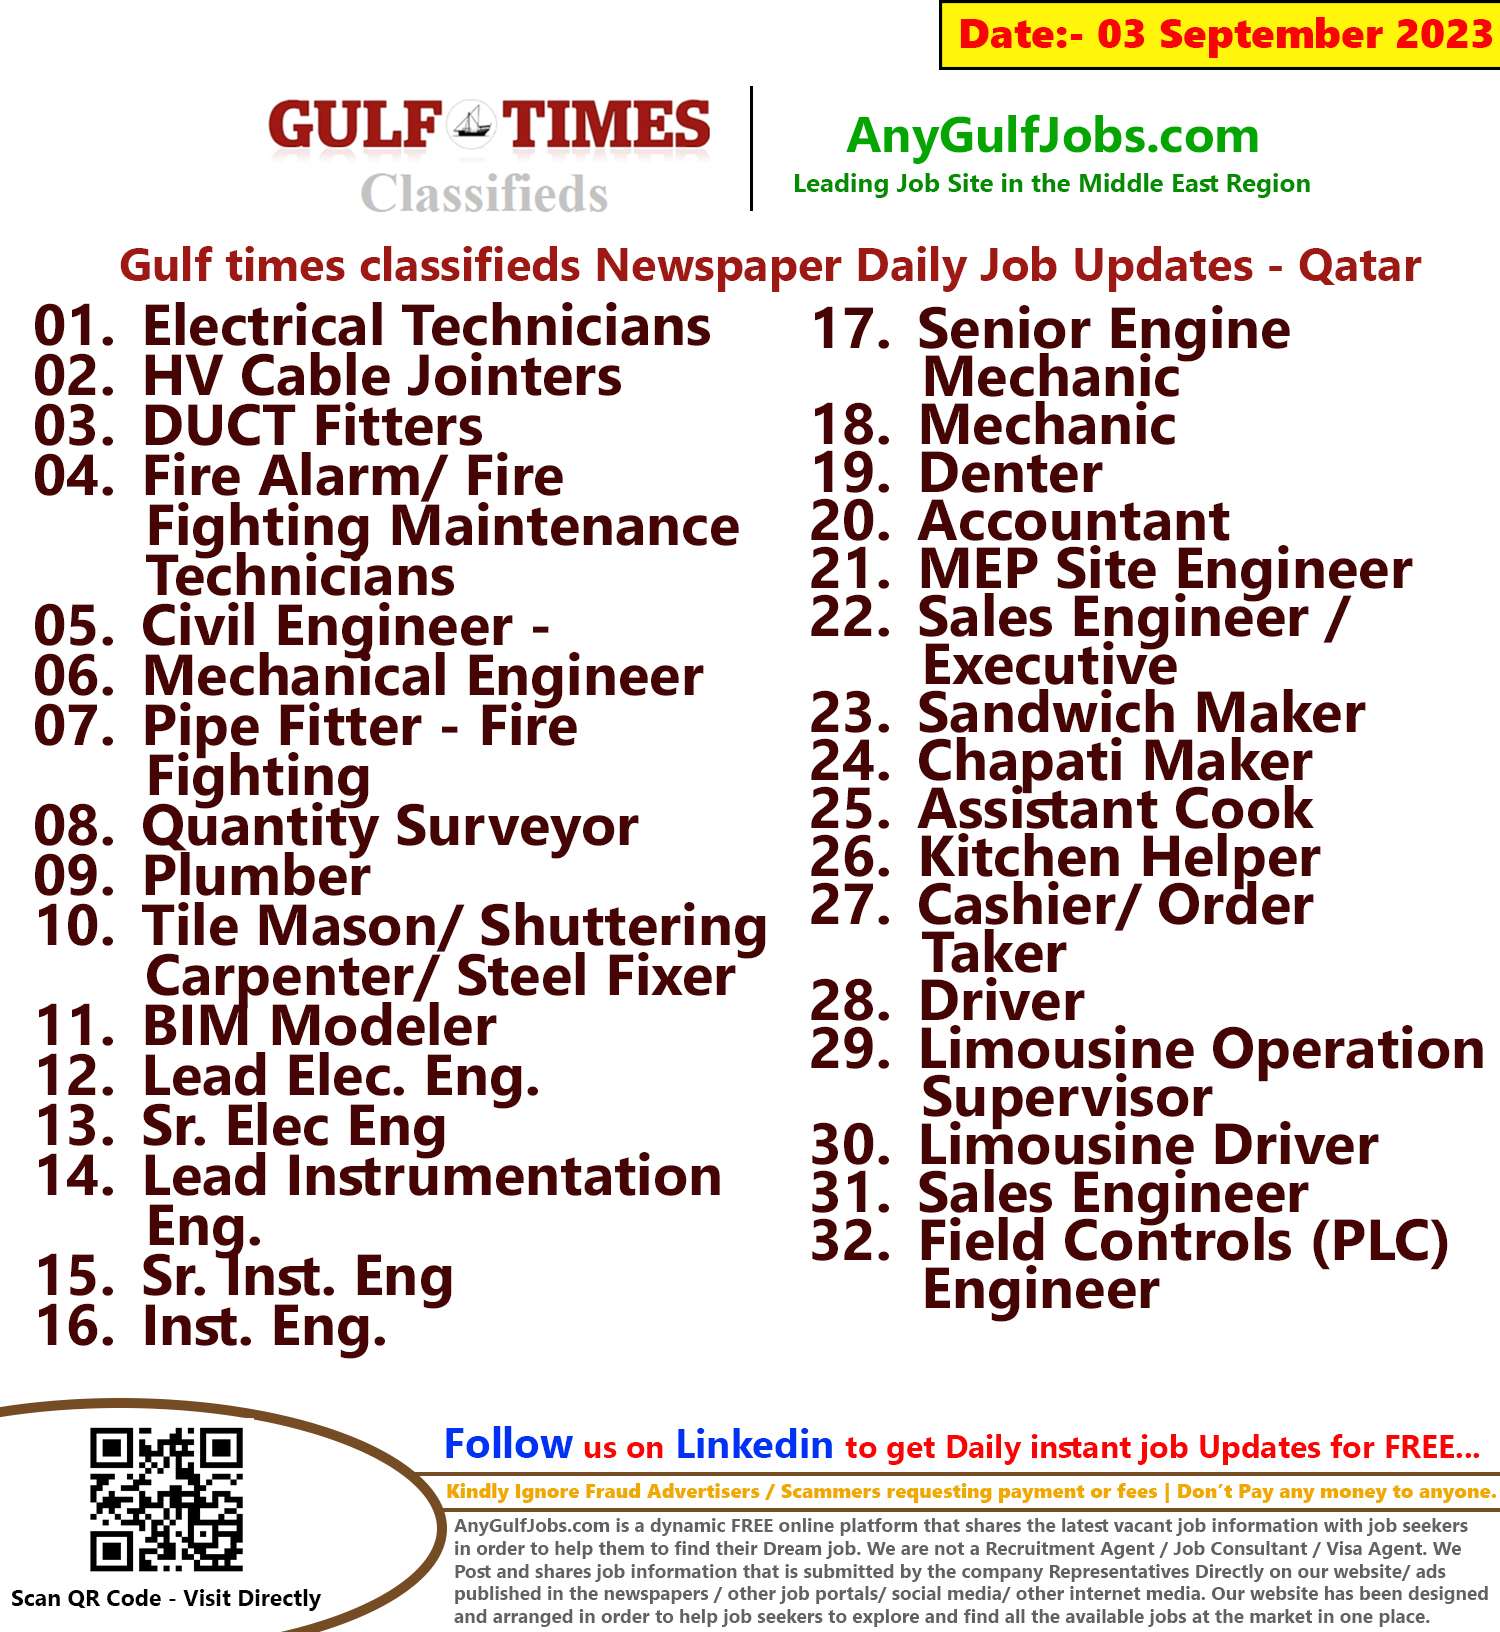 Gulf times classifieds Job Vacancies Qatar - 03 September 2023